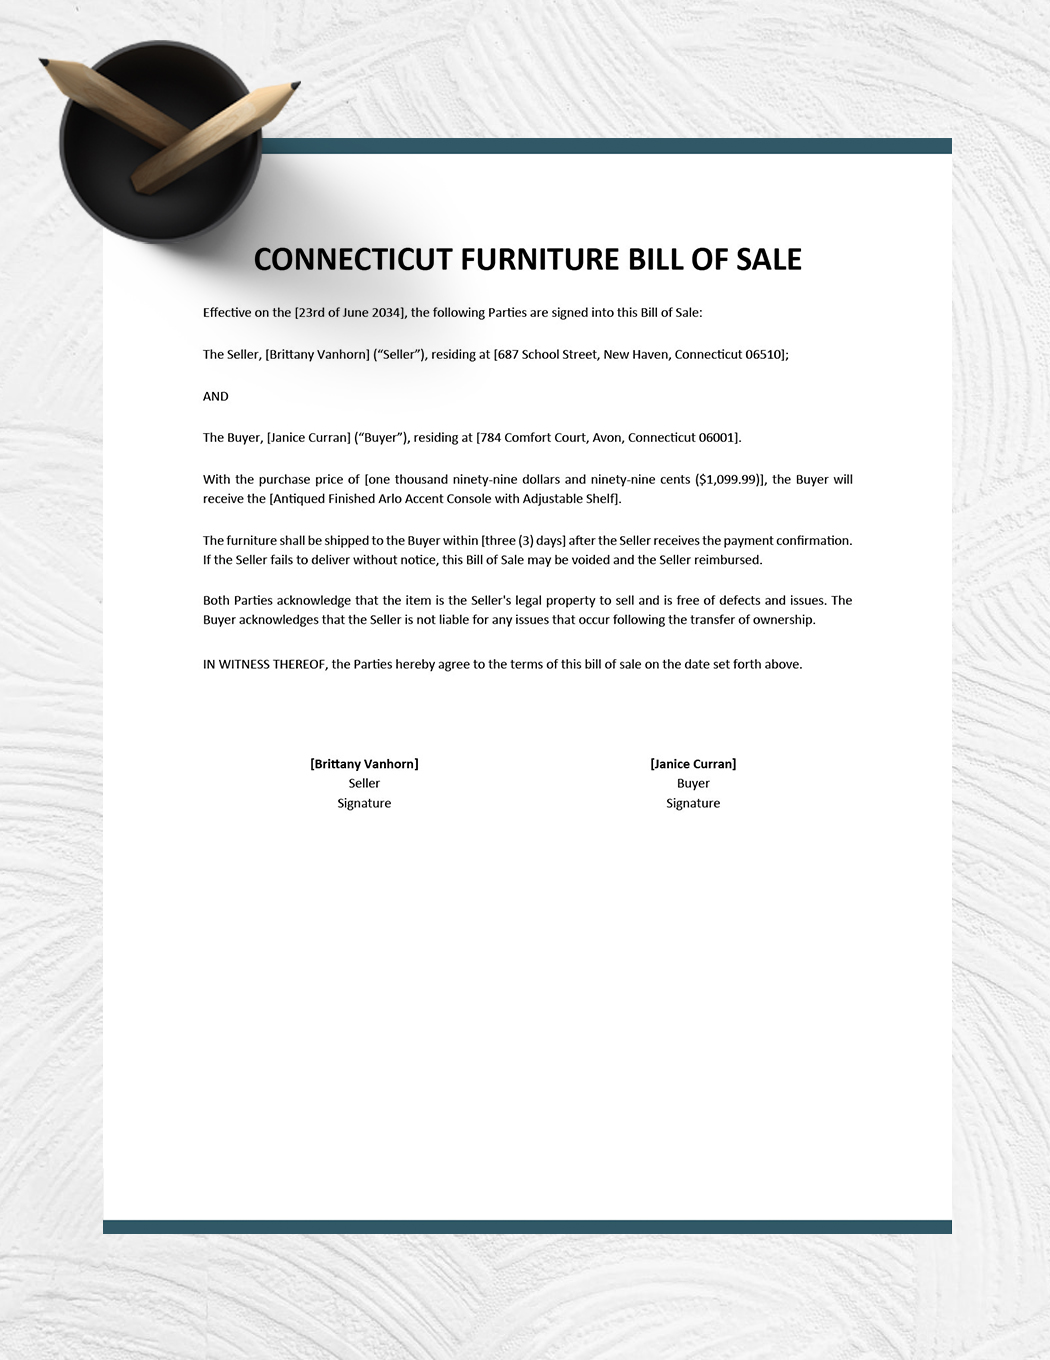 Connecticut Furniture Bill of Sale Template